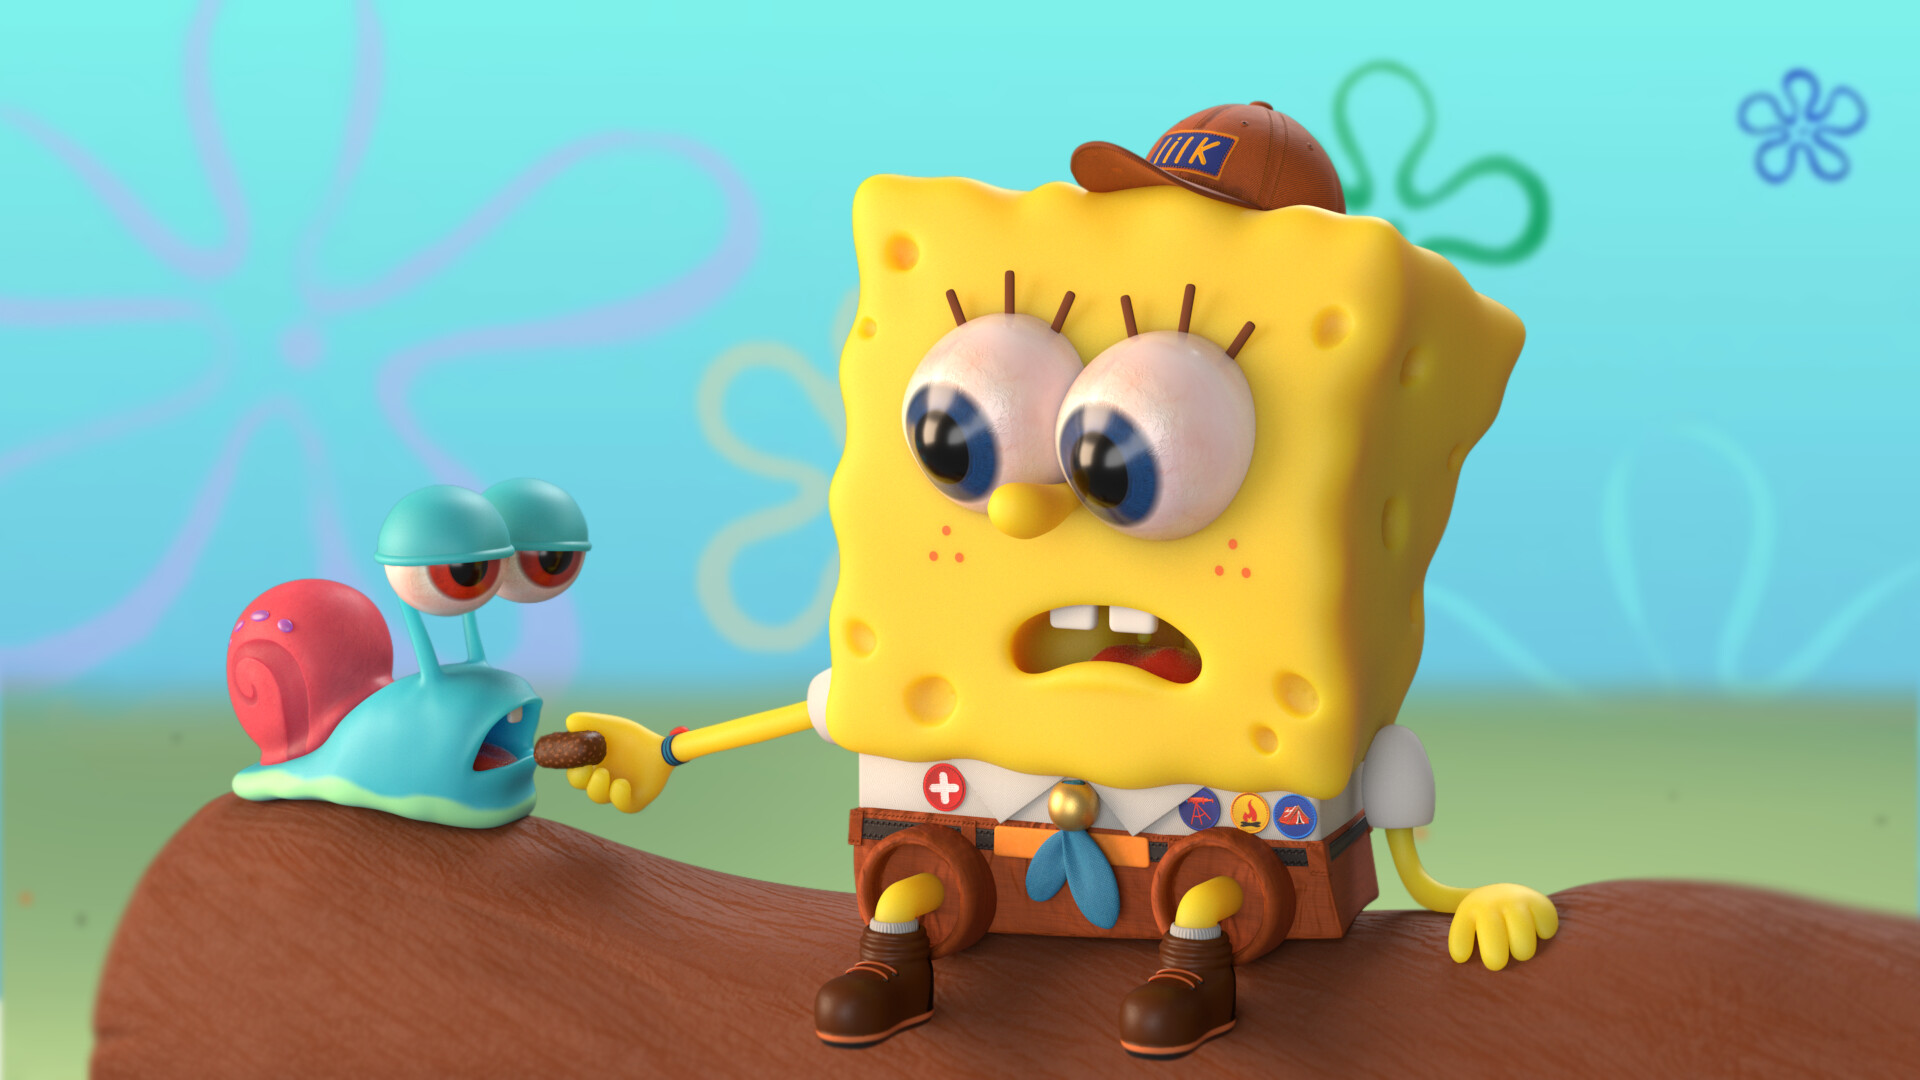 spongebob squarepants baby gary